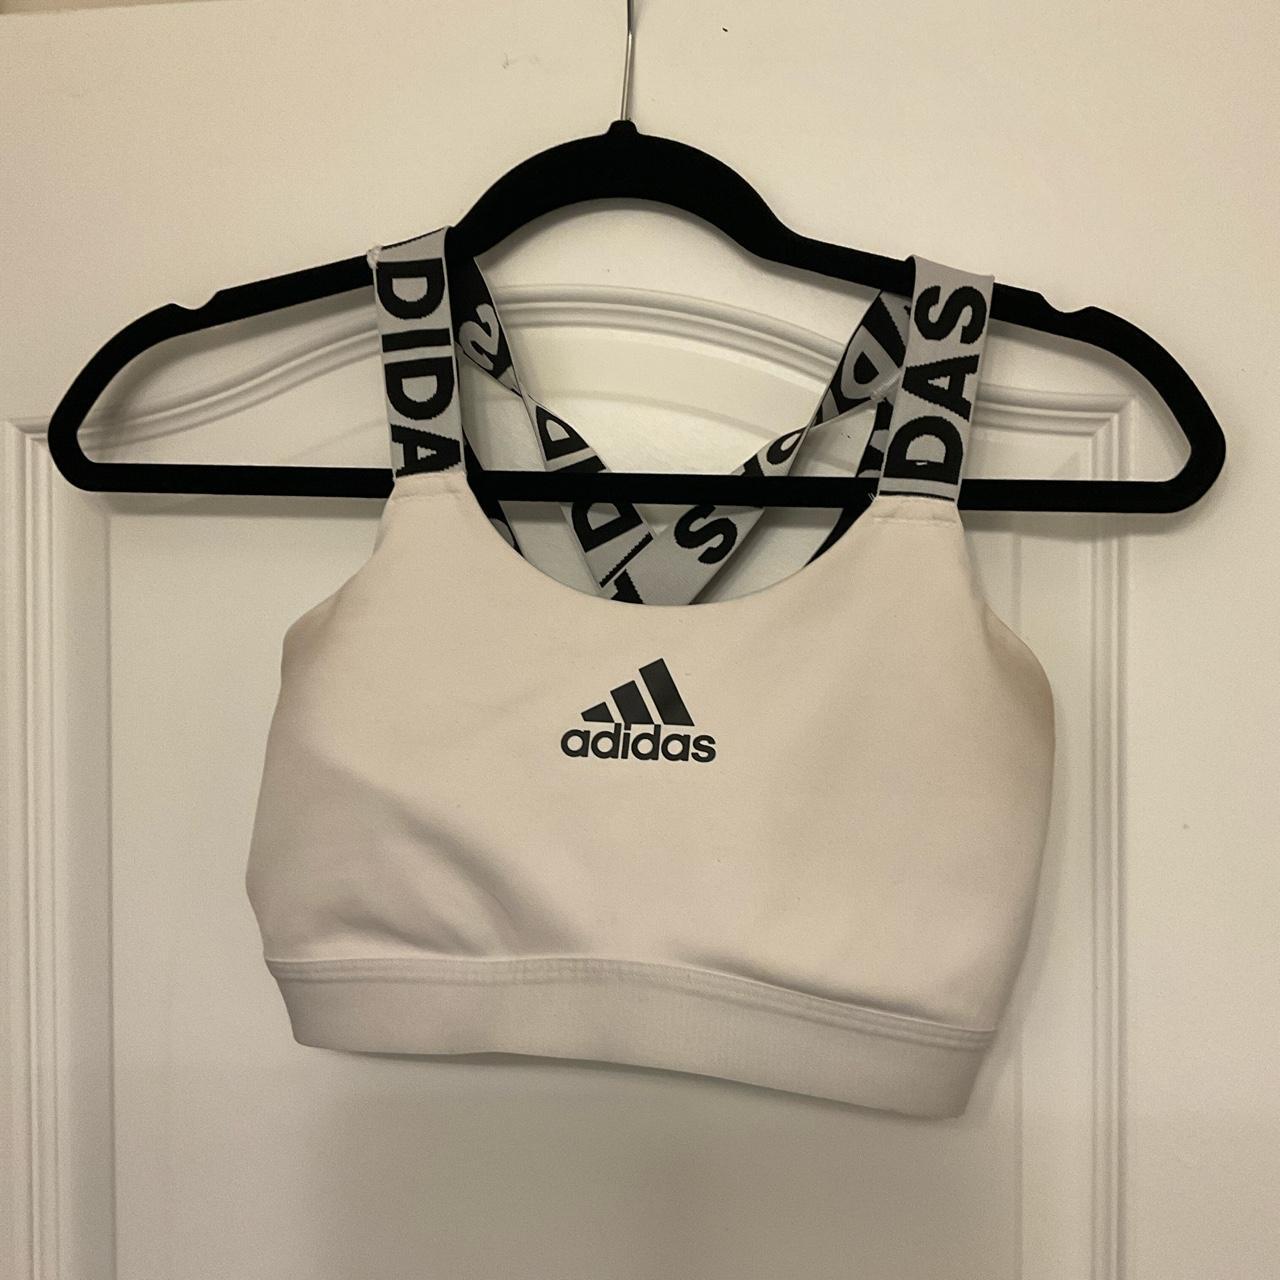 Adidas sports bra Size small #lululemon #adidas - Depop